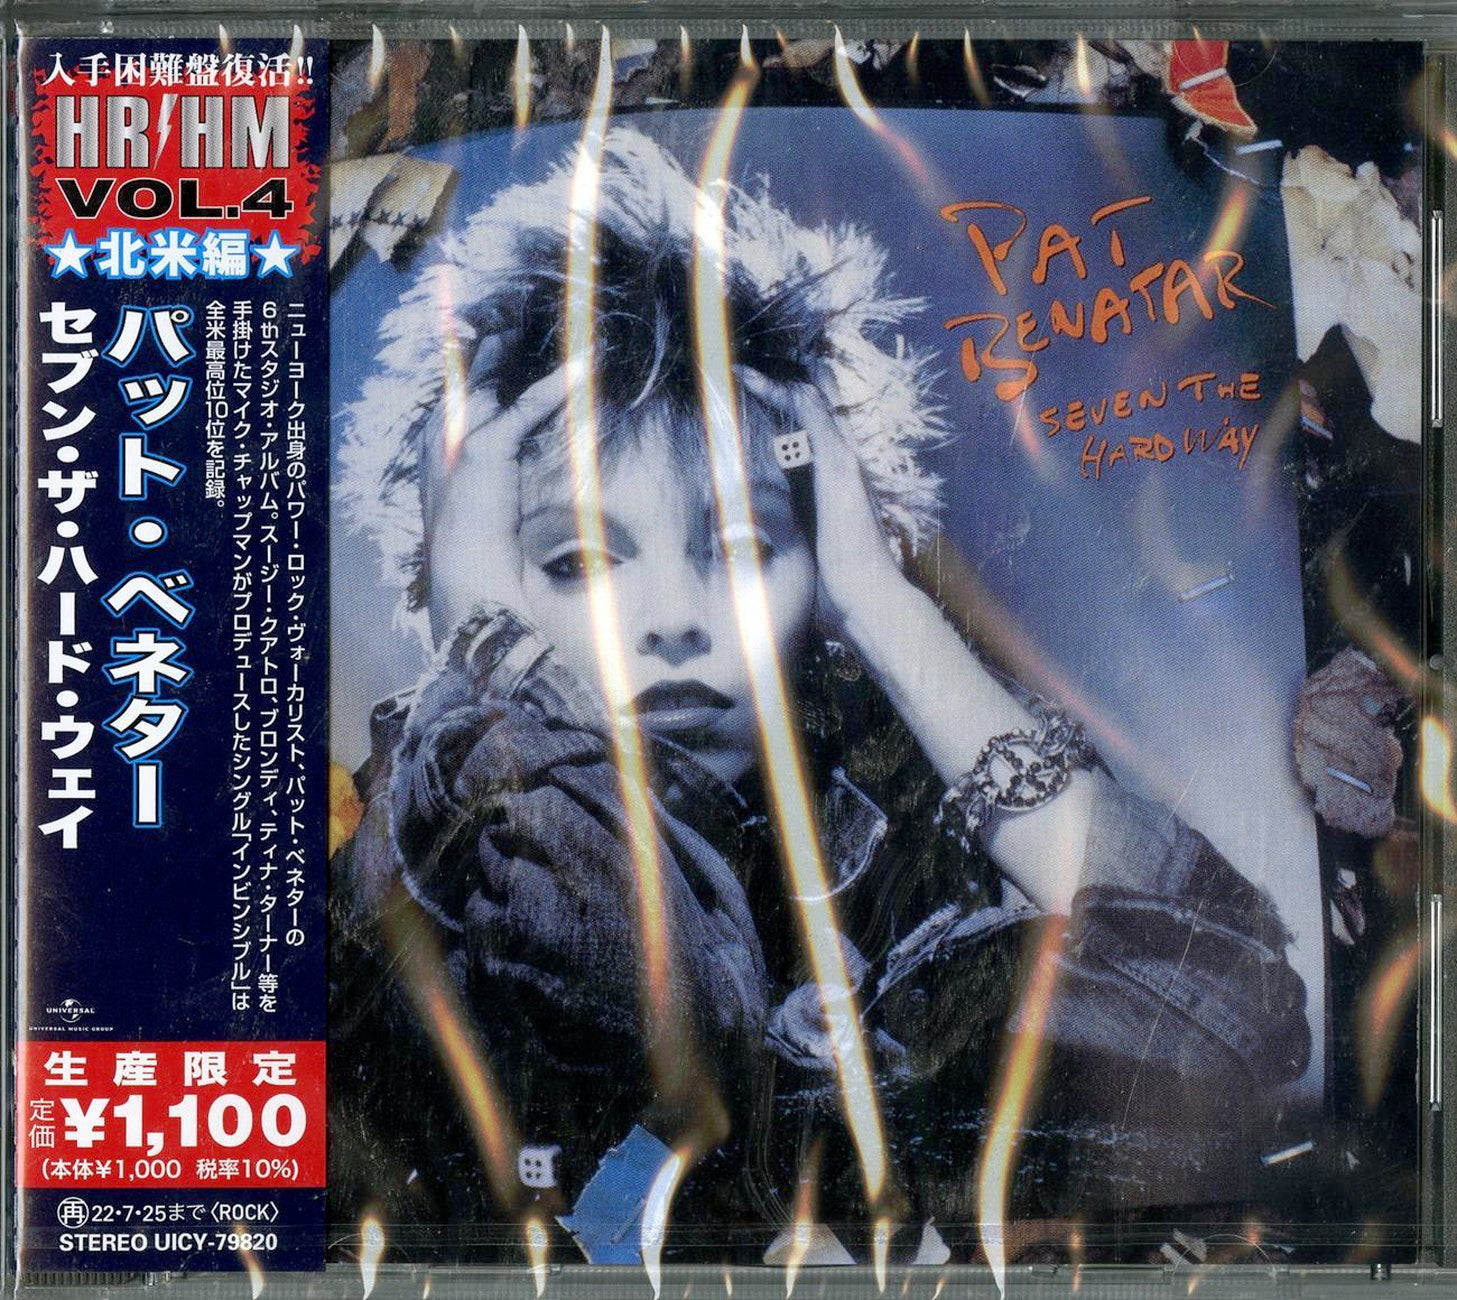 Pat Benatar - Seven The Hard Way - Japan CD Limited Edition – CDs Vinyl  Japan Store CD